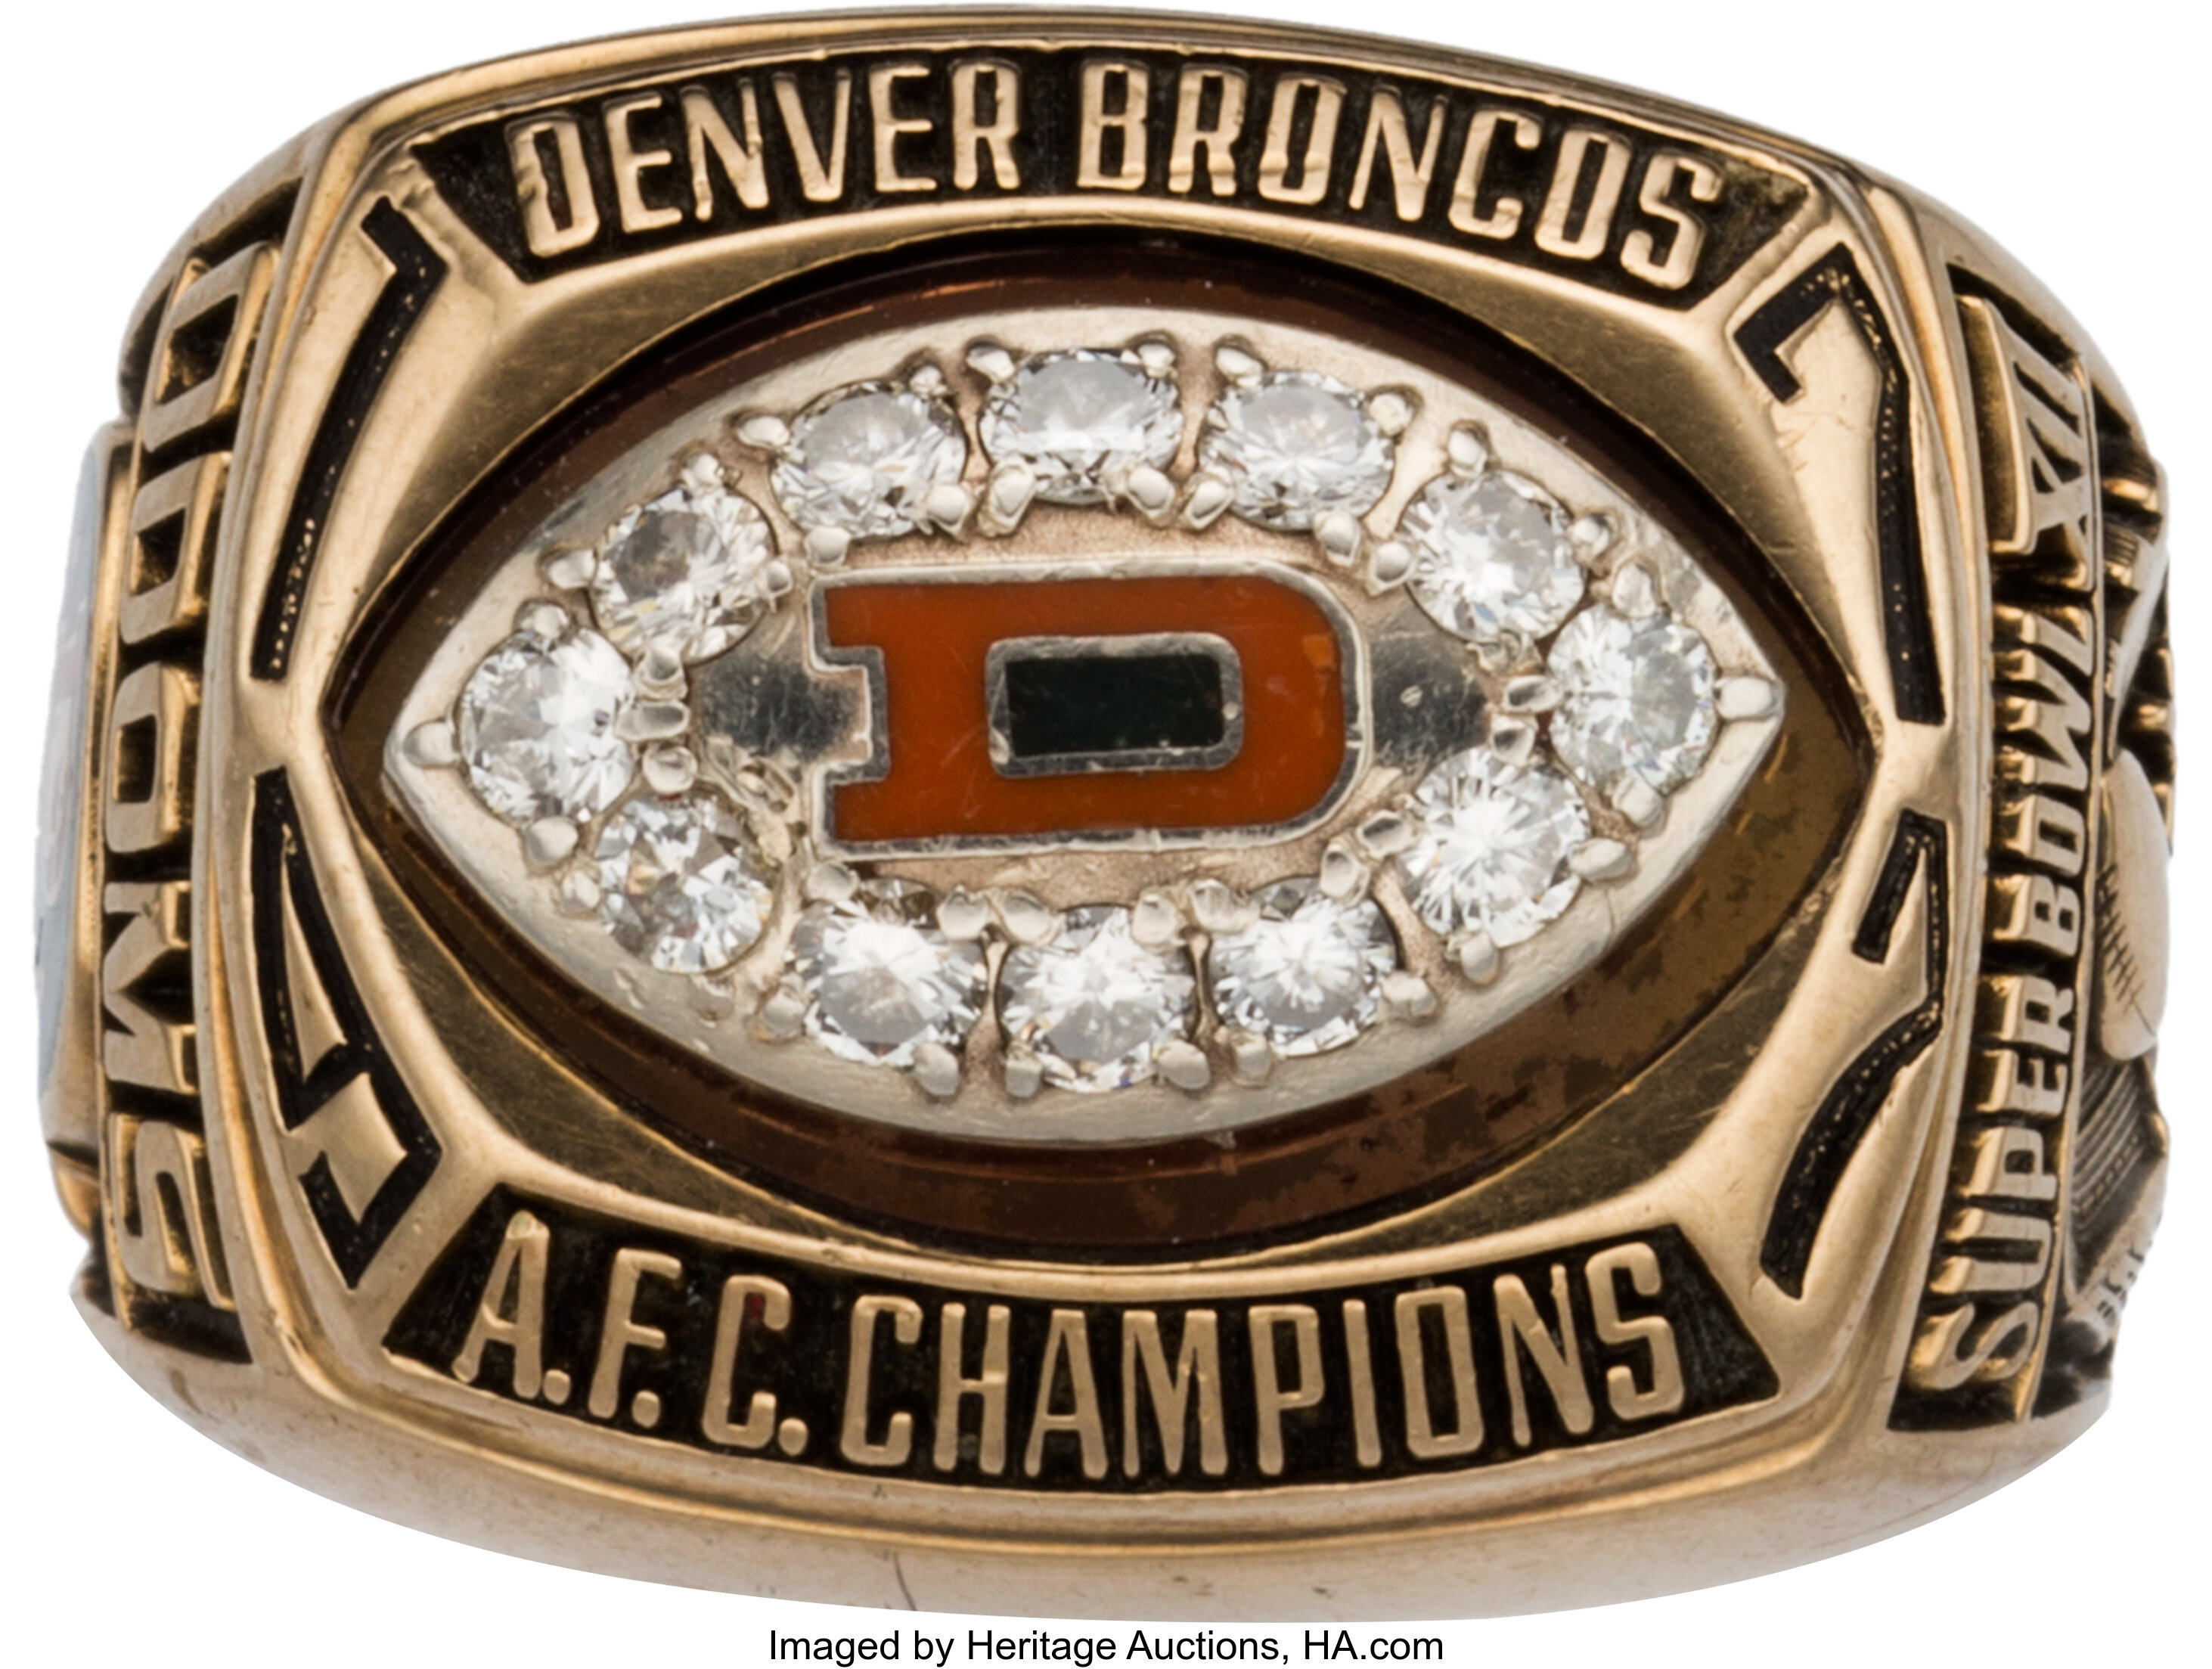 1977 Denver Broncos AFC Championship Ring Presented to Riley